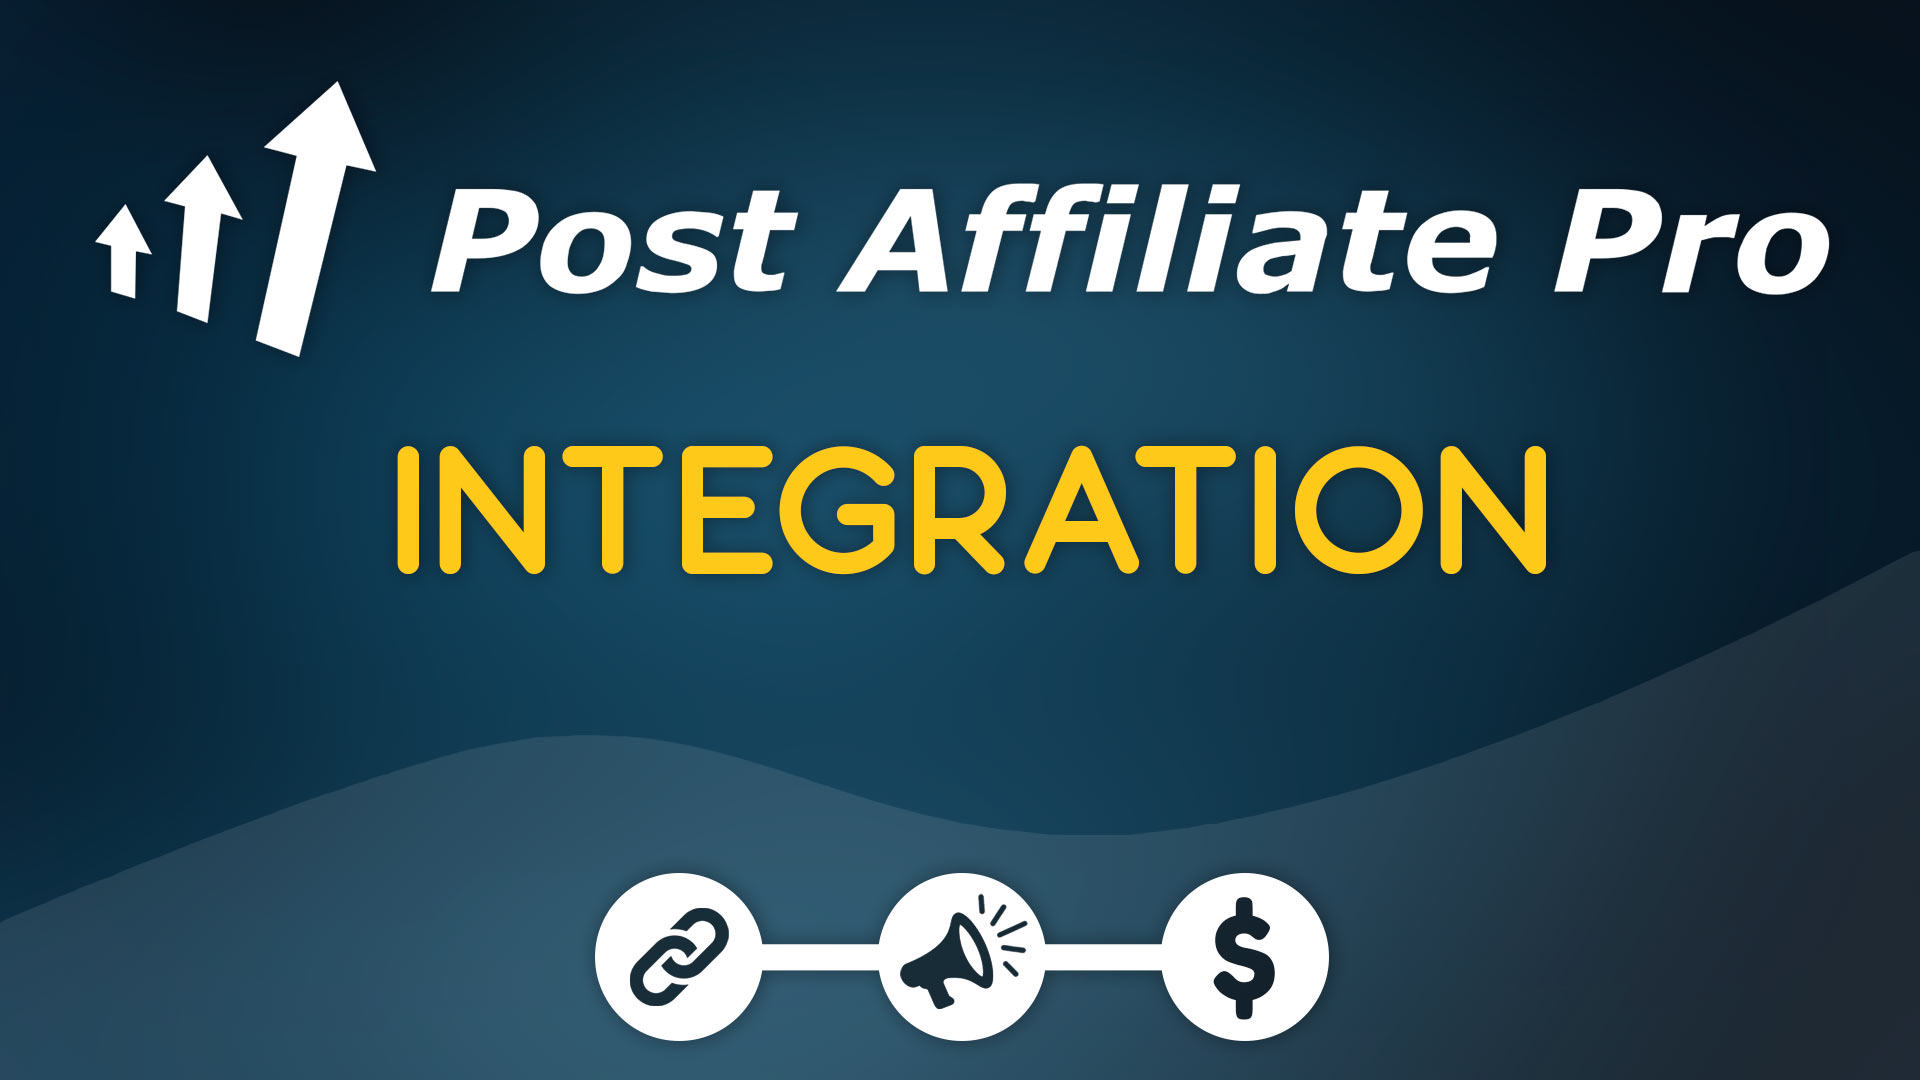 Post Affiliate Pro Affiliate Website Integration